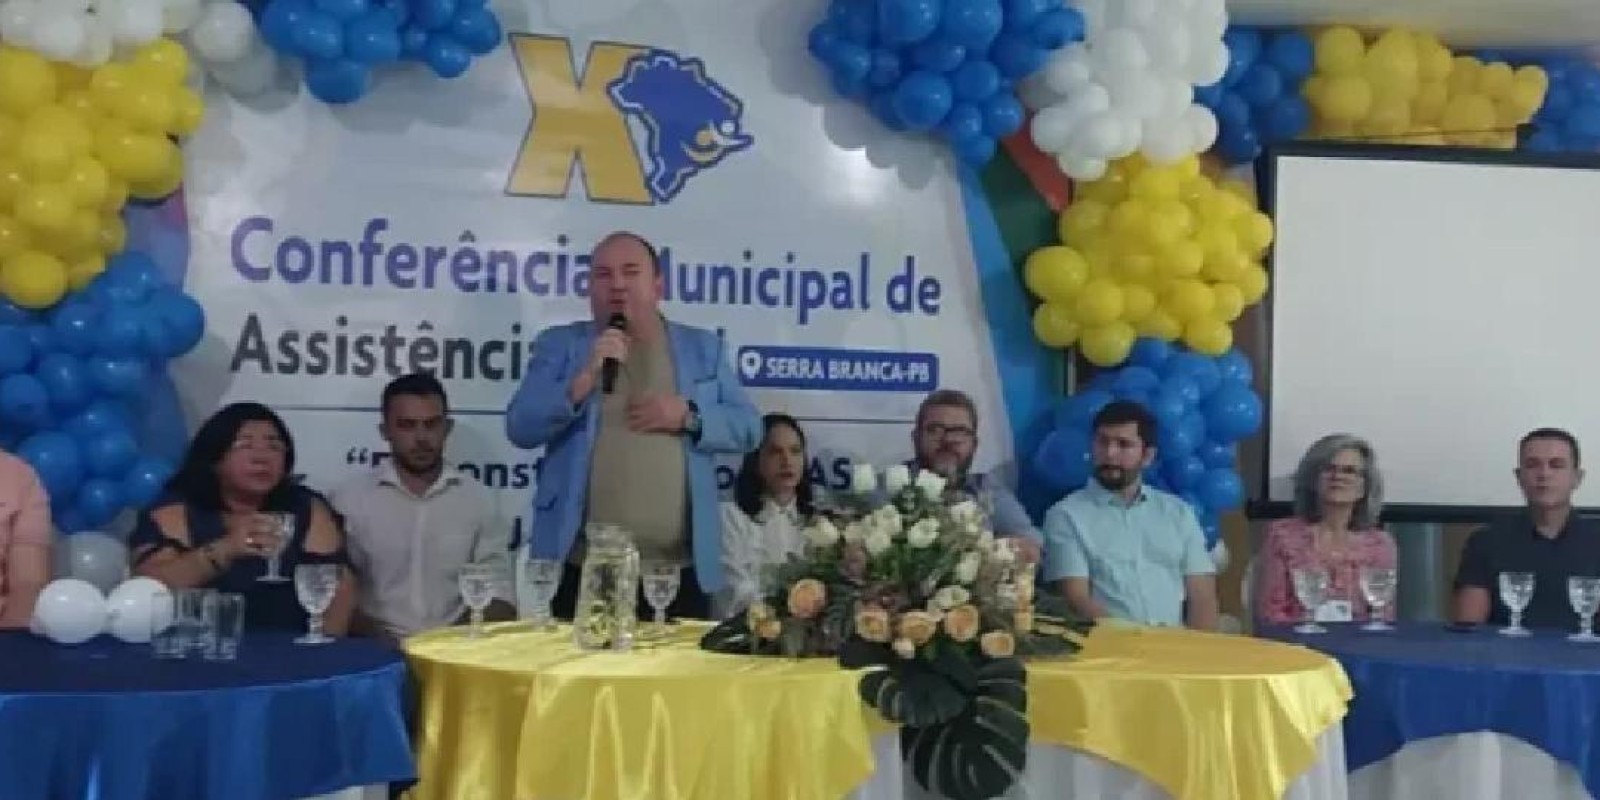 Prefeitura de Serra Branca realiza a 10º Conferência Municipal de Assistência Social